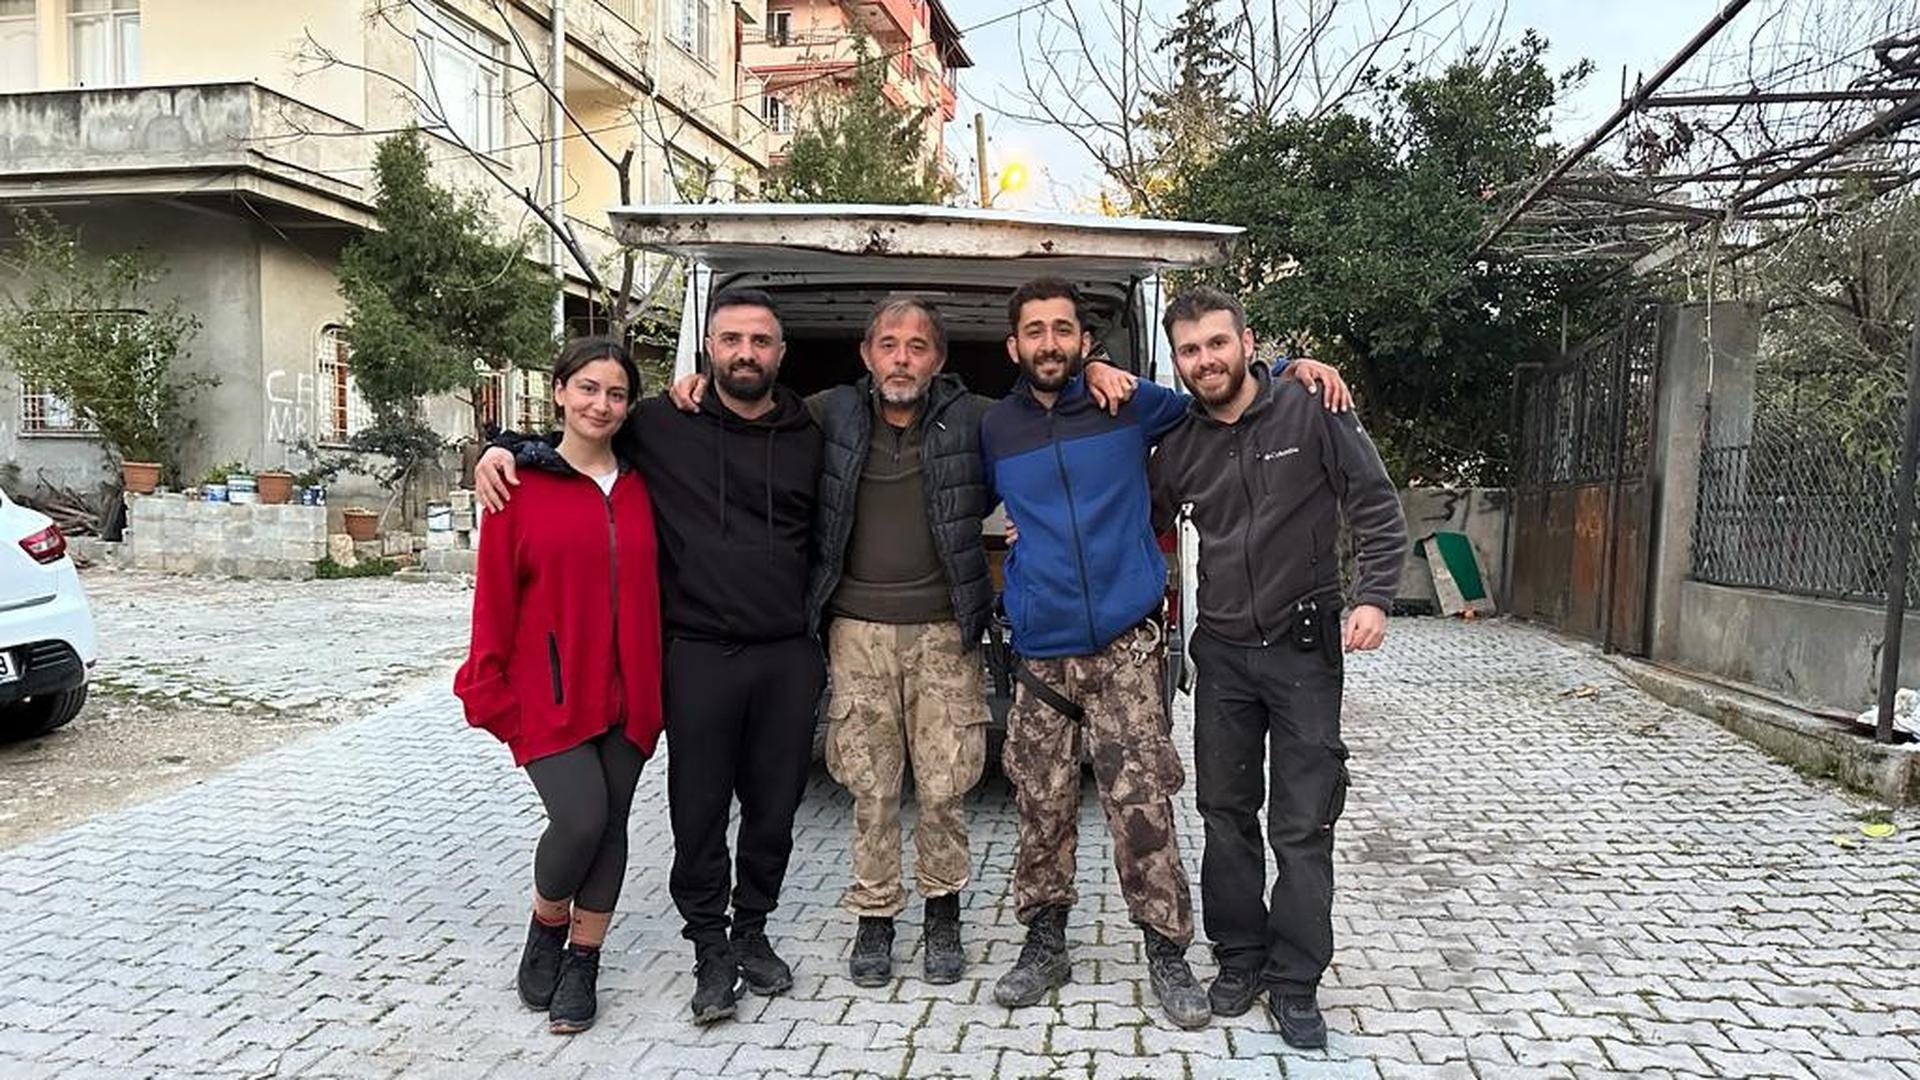 Einsatz im Krisengebiet: Sara Aslanoğlu, Cuma Sarı, Atilla, Ercan Polat und Mustafa Karakuş (von links) helfen den Erdbebenopfern in der Türkei. 